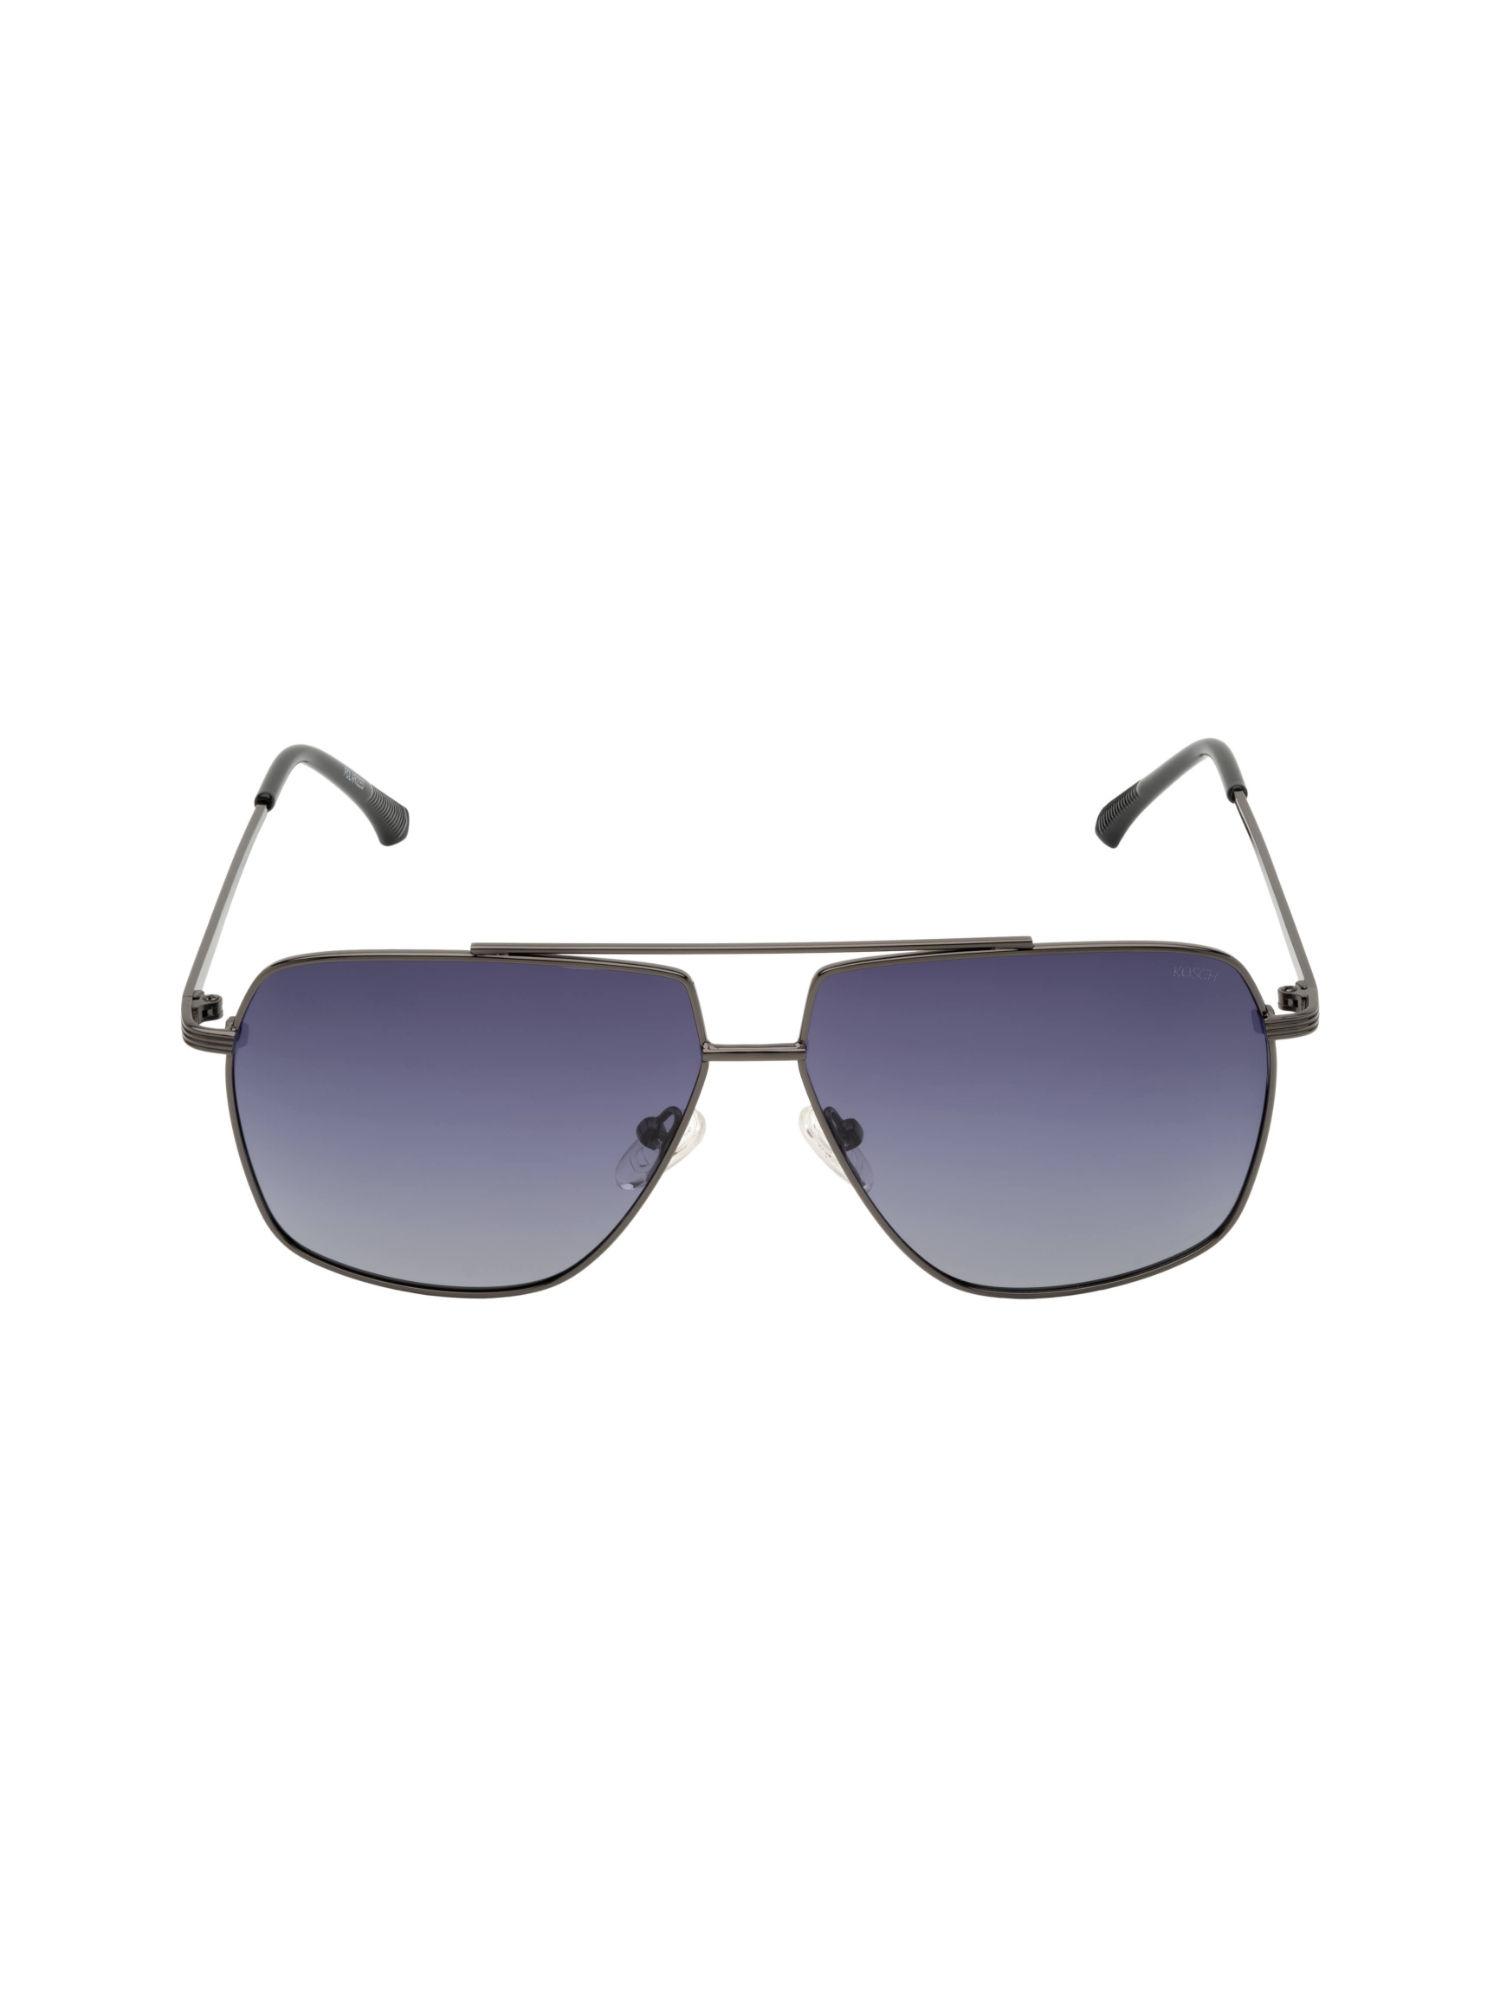 violet---rectangle-shape-sunglasses---kst-22822